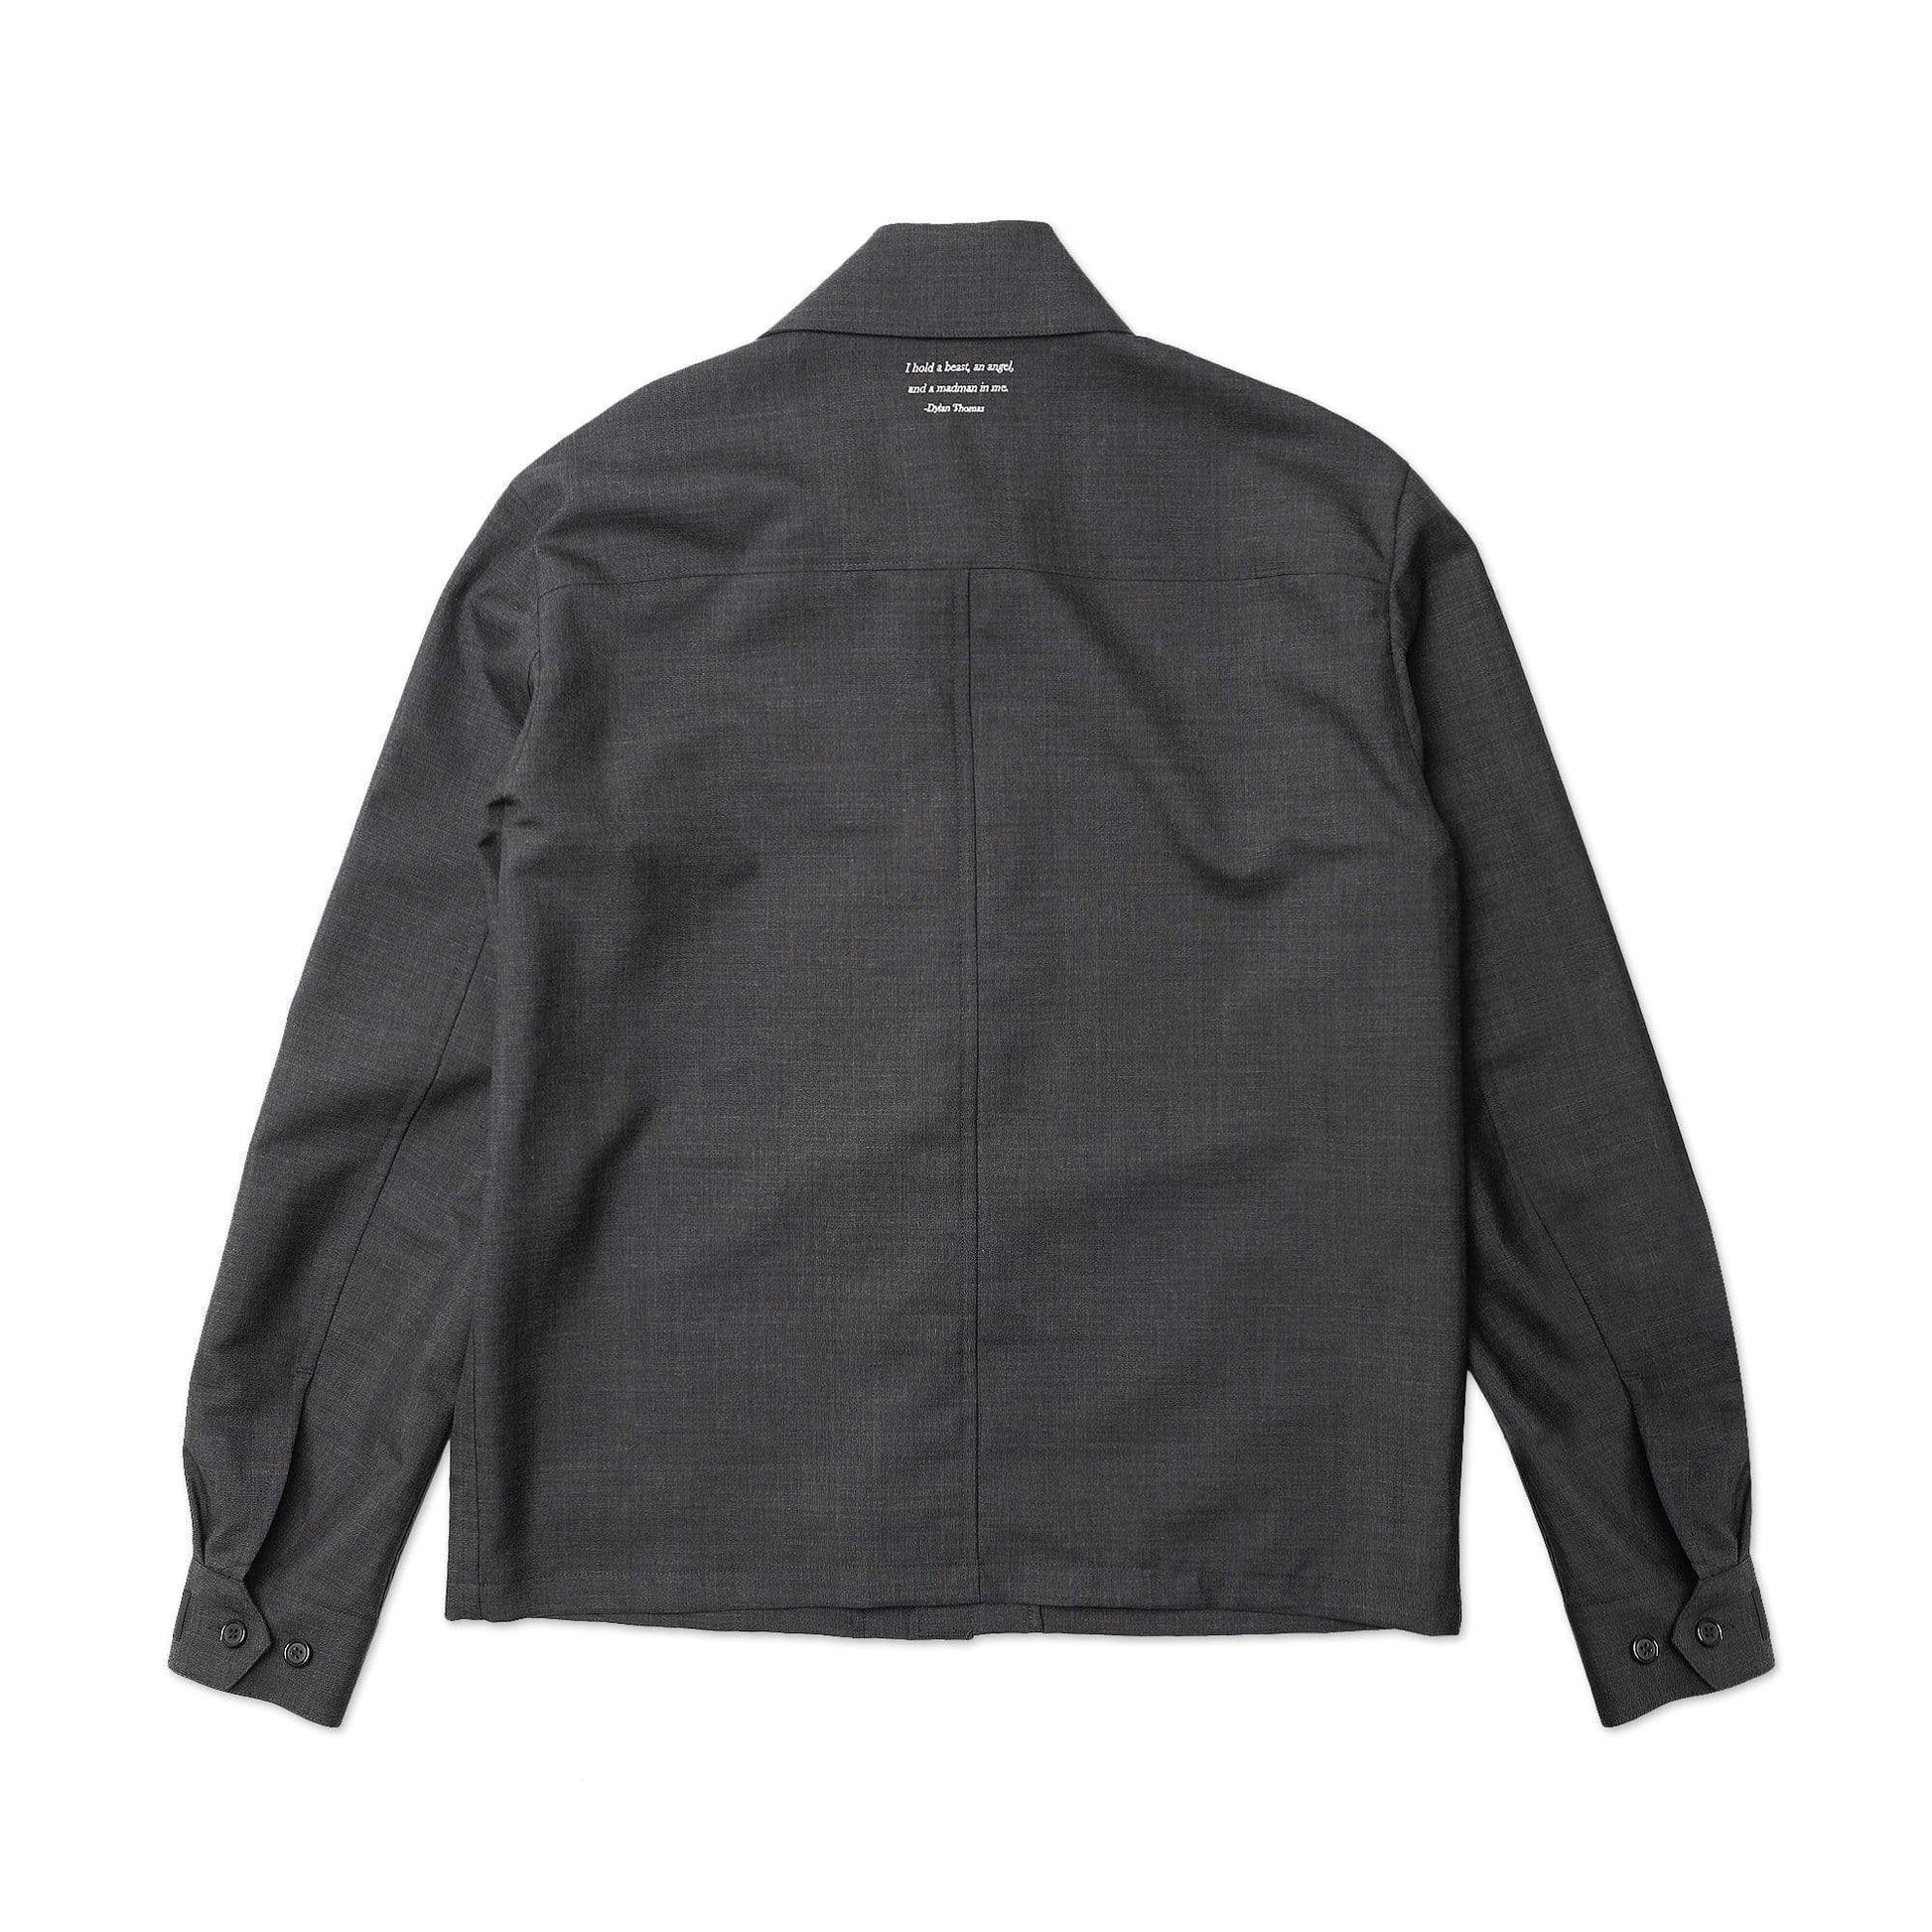 undercover blouson jacket (charcoal) - ucy4204-1 - a.plus - Image - 2